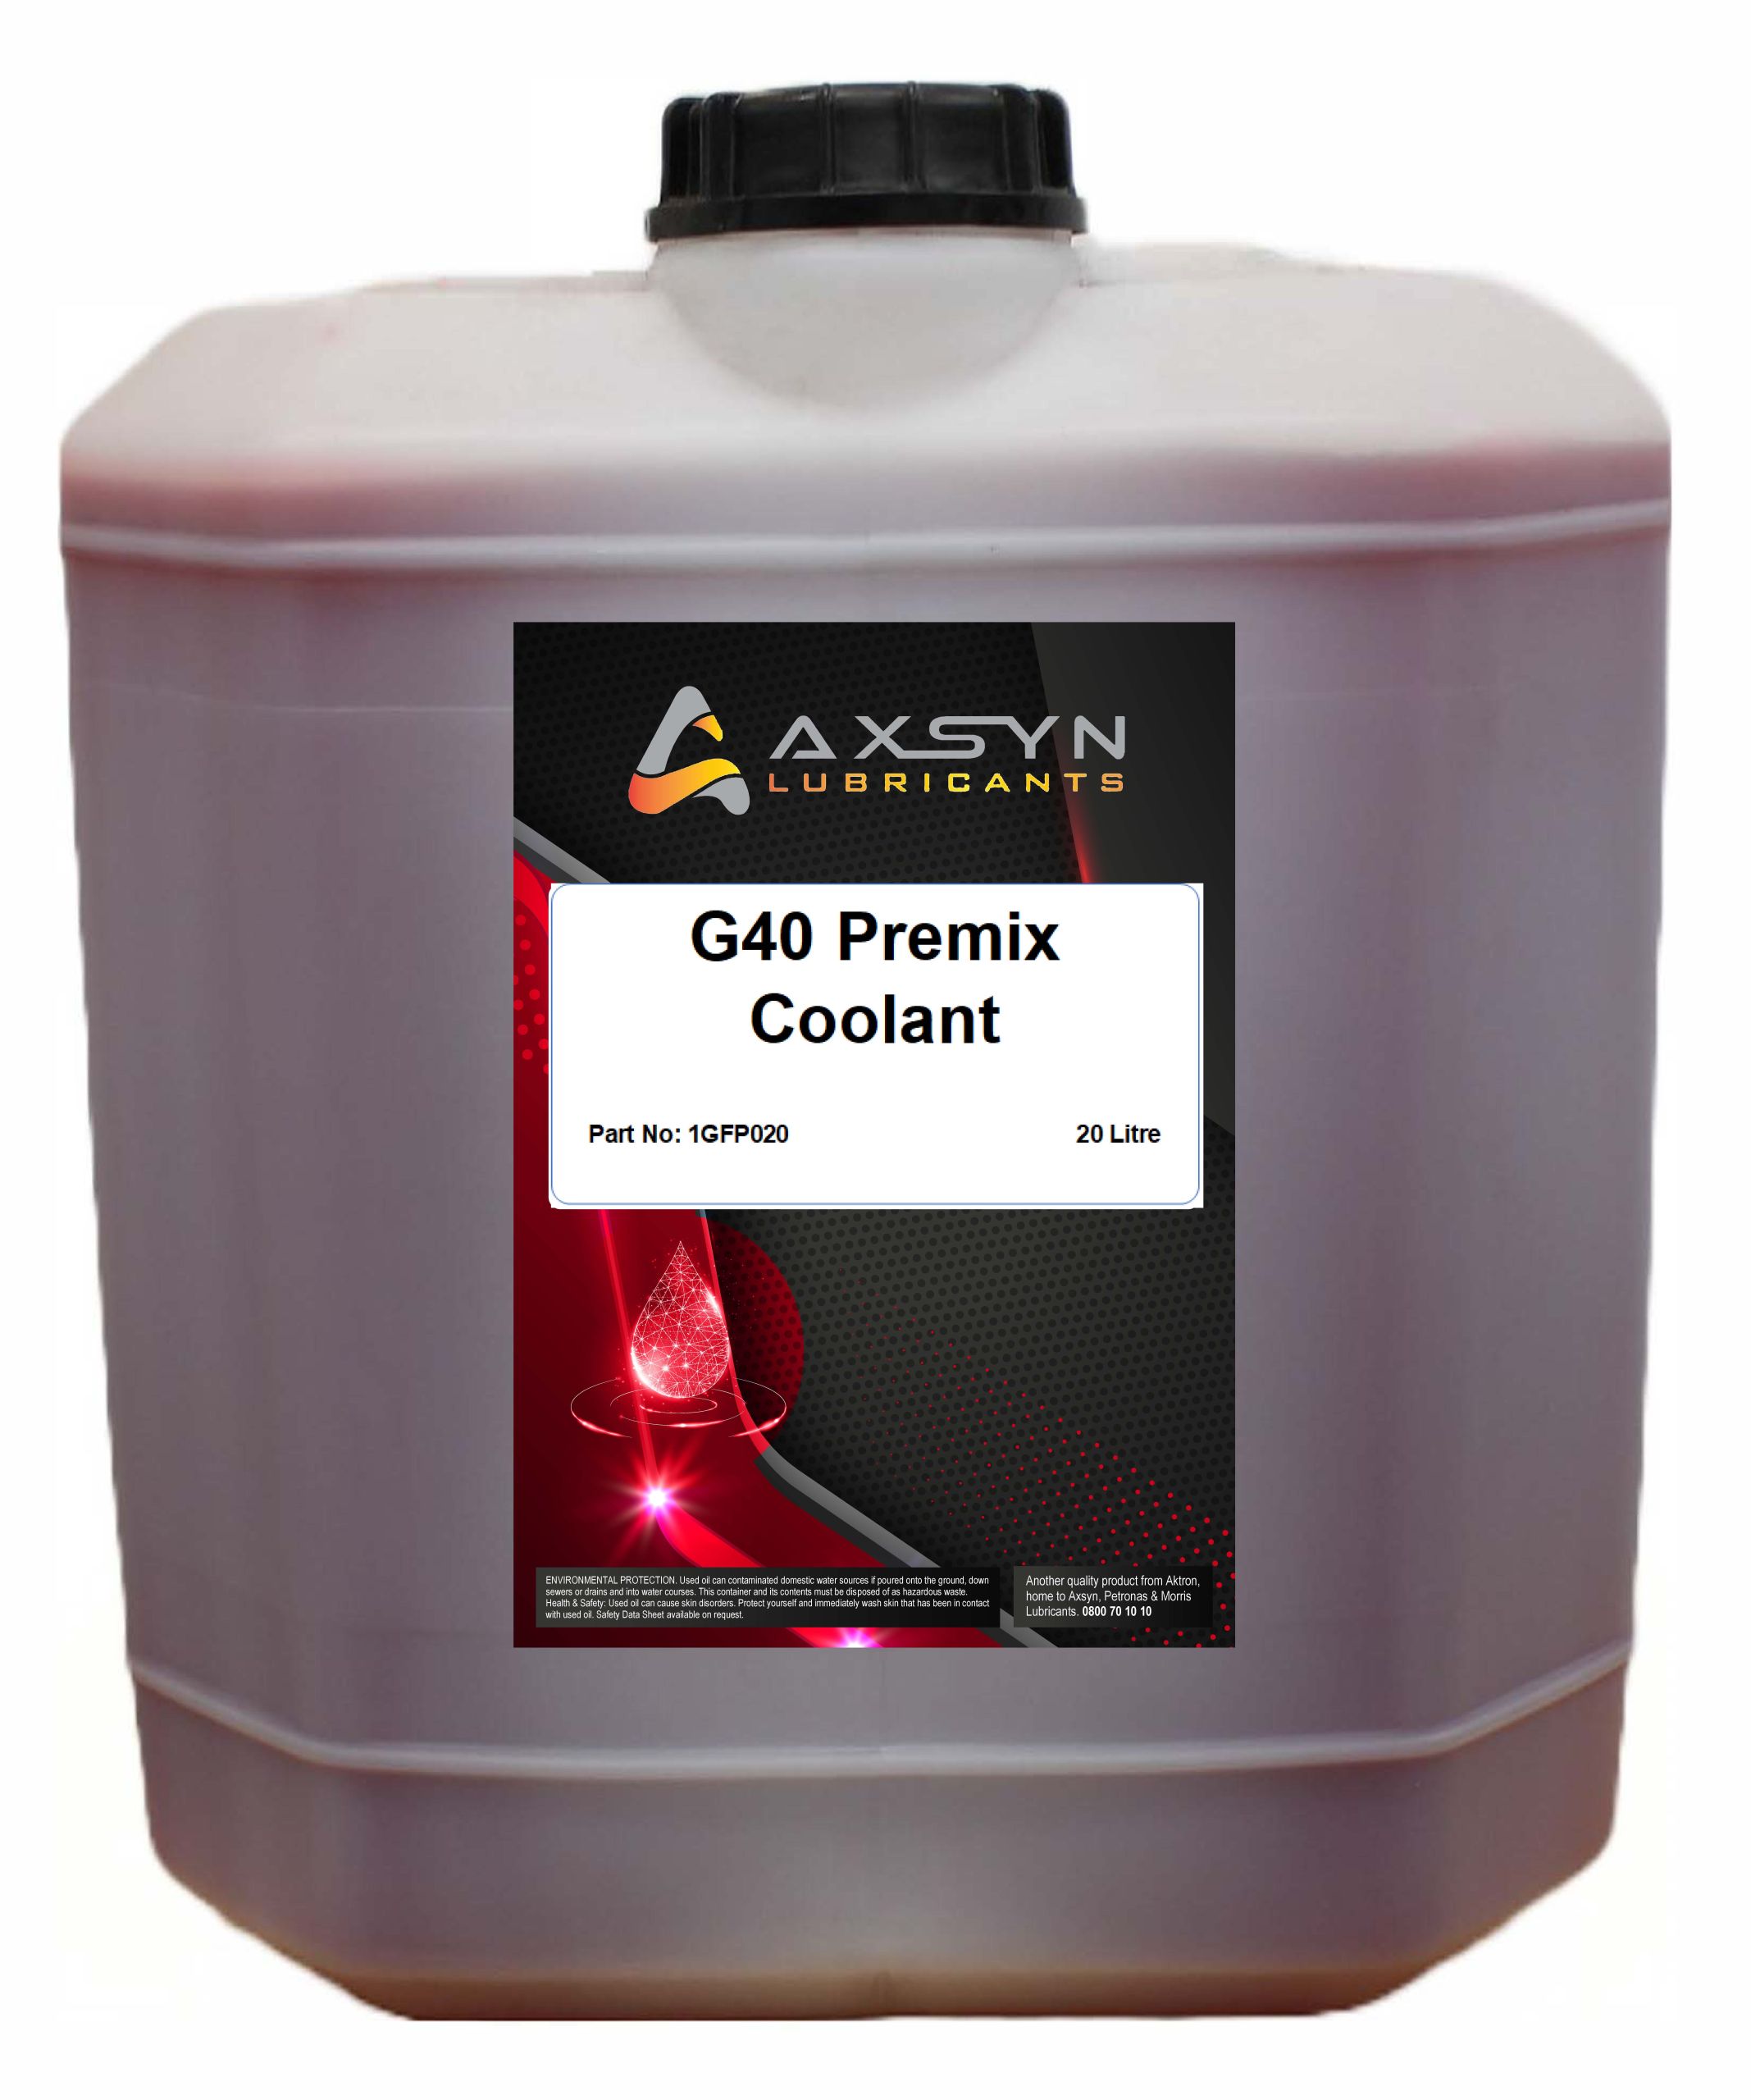 Axsyn G40 Premix Coolant